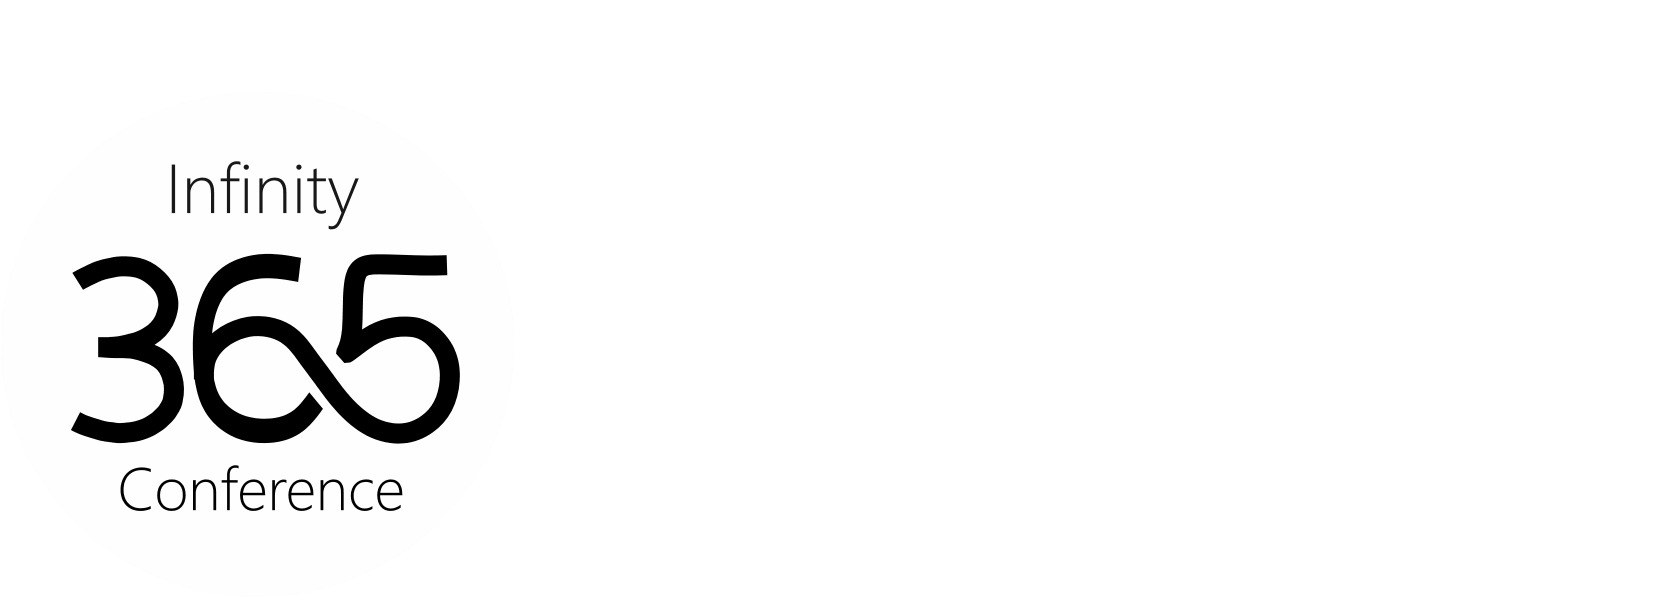 sharepoint infinity